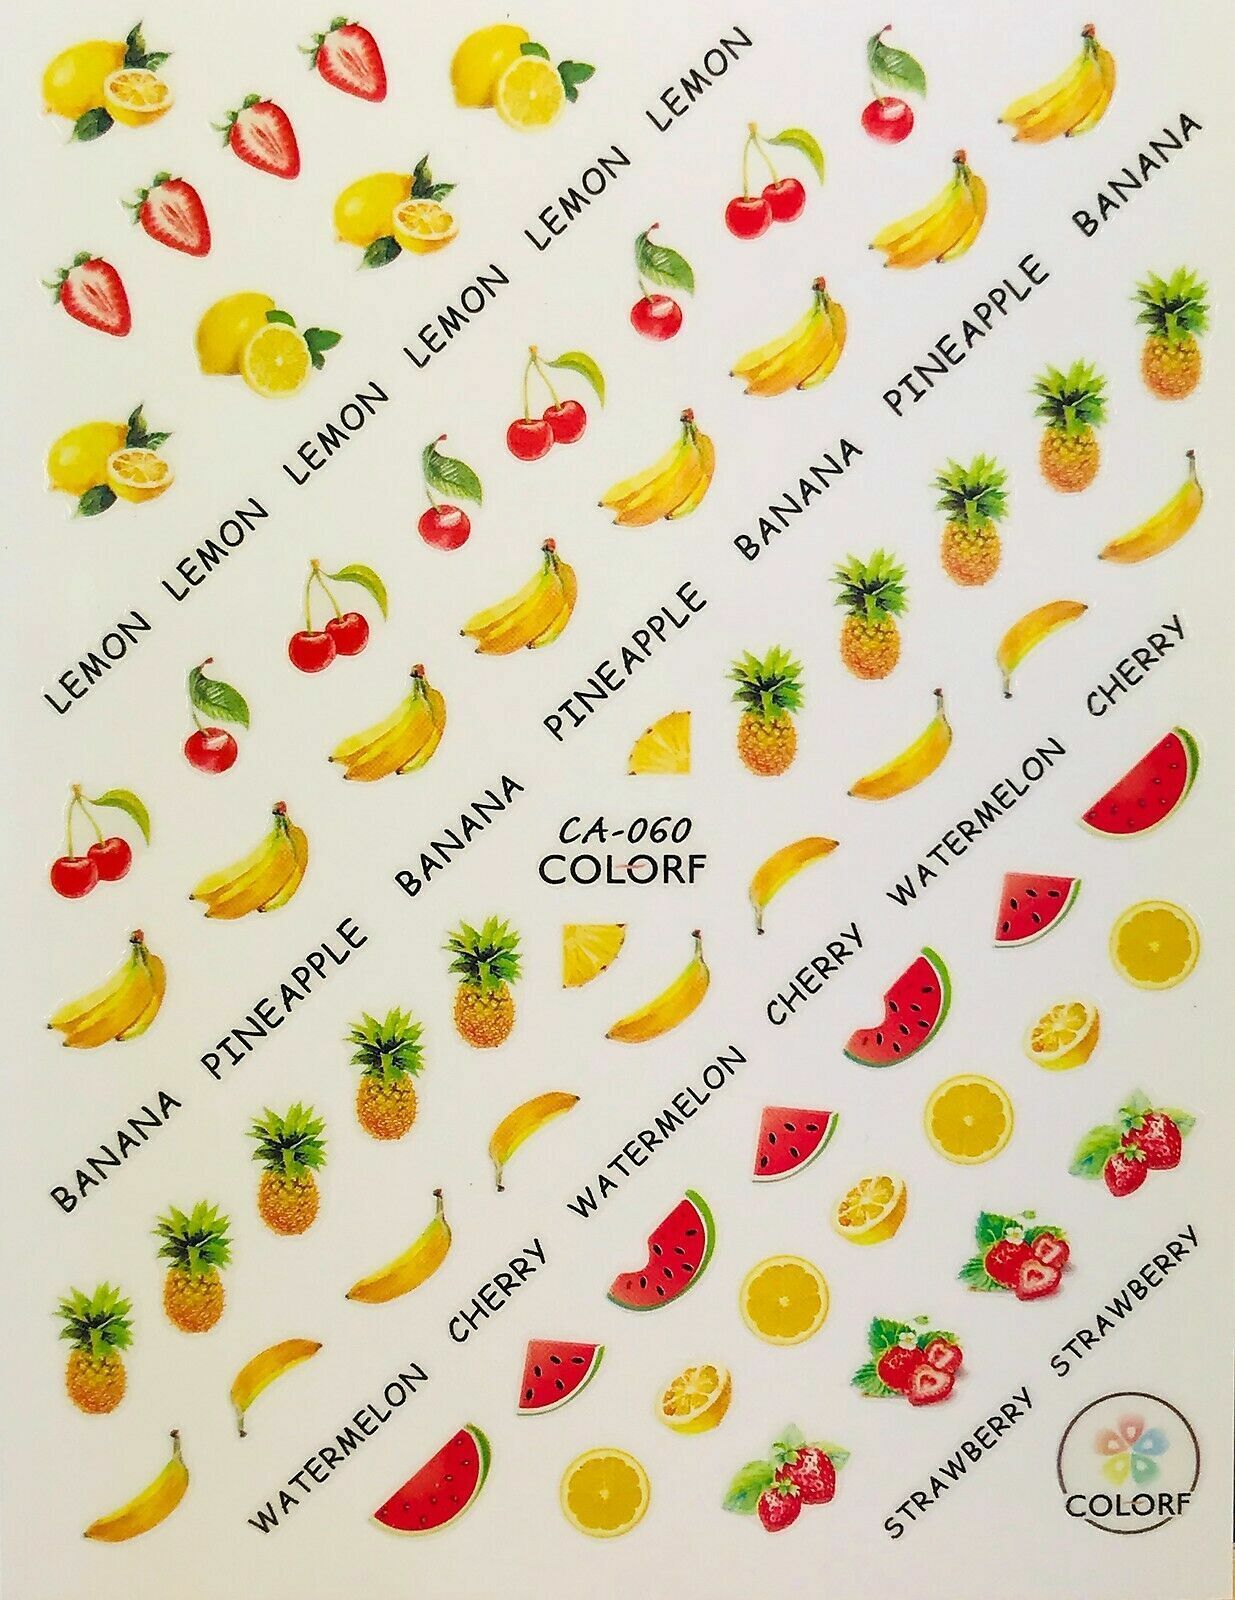 Nail Art 3D Decal Stickers Fruit Lemon Banana Pineapple Watermelon Cherry CA060